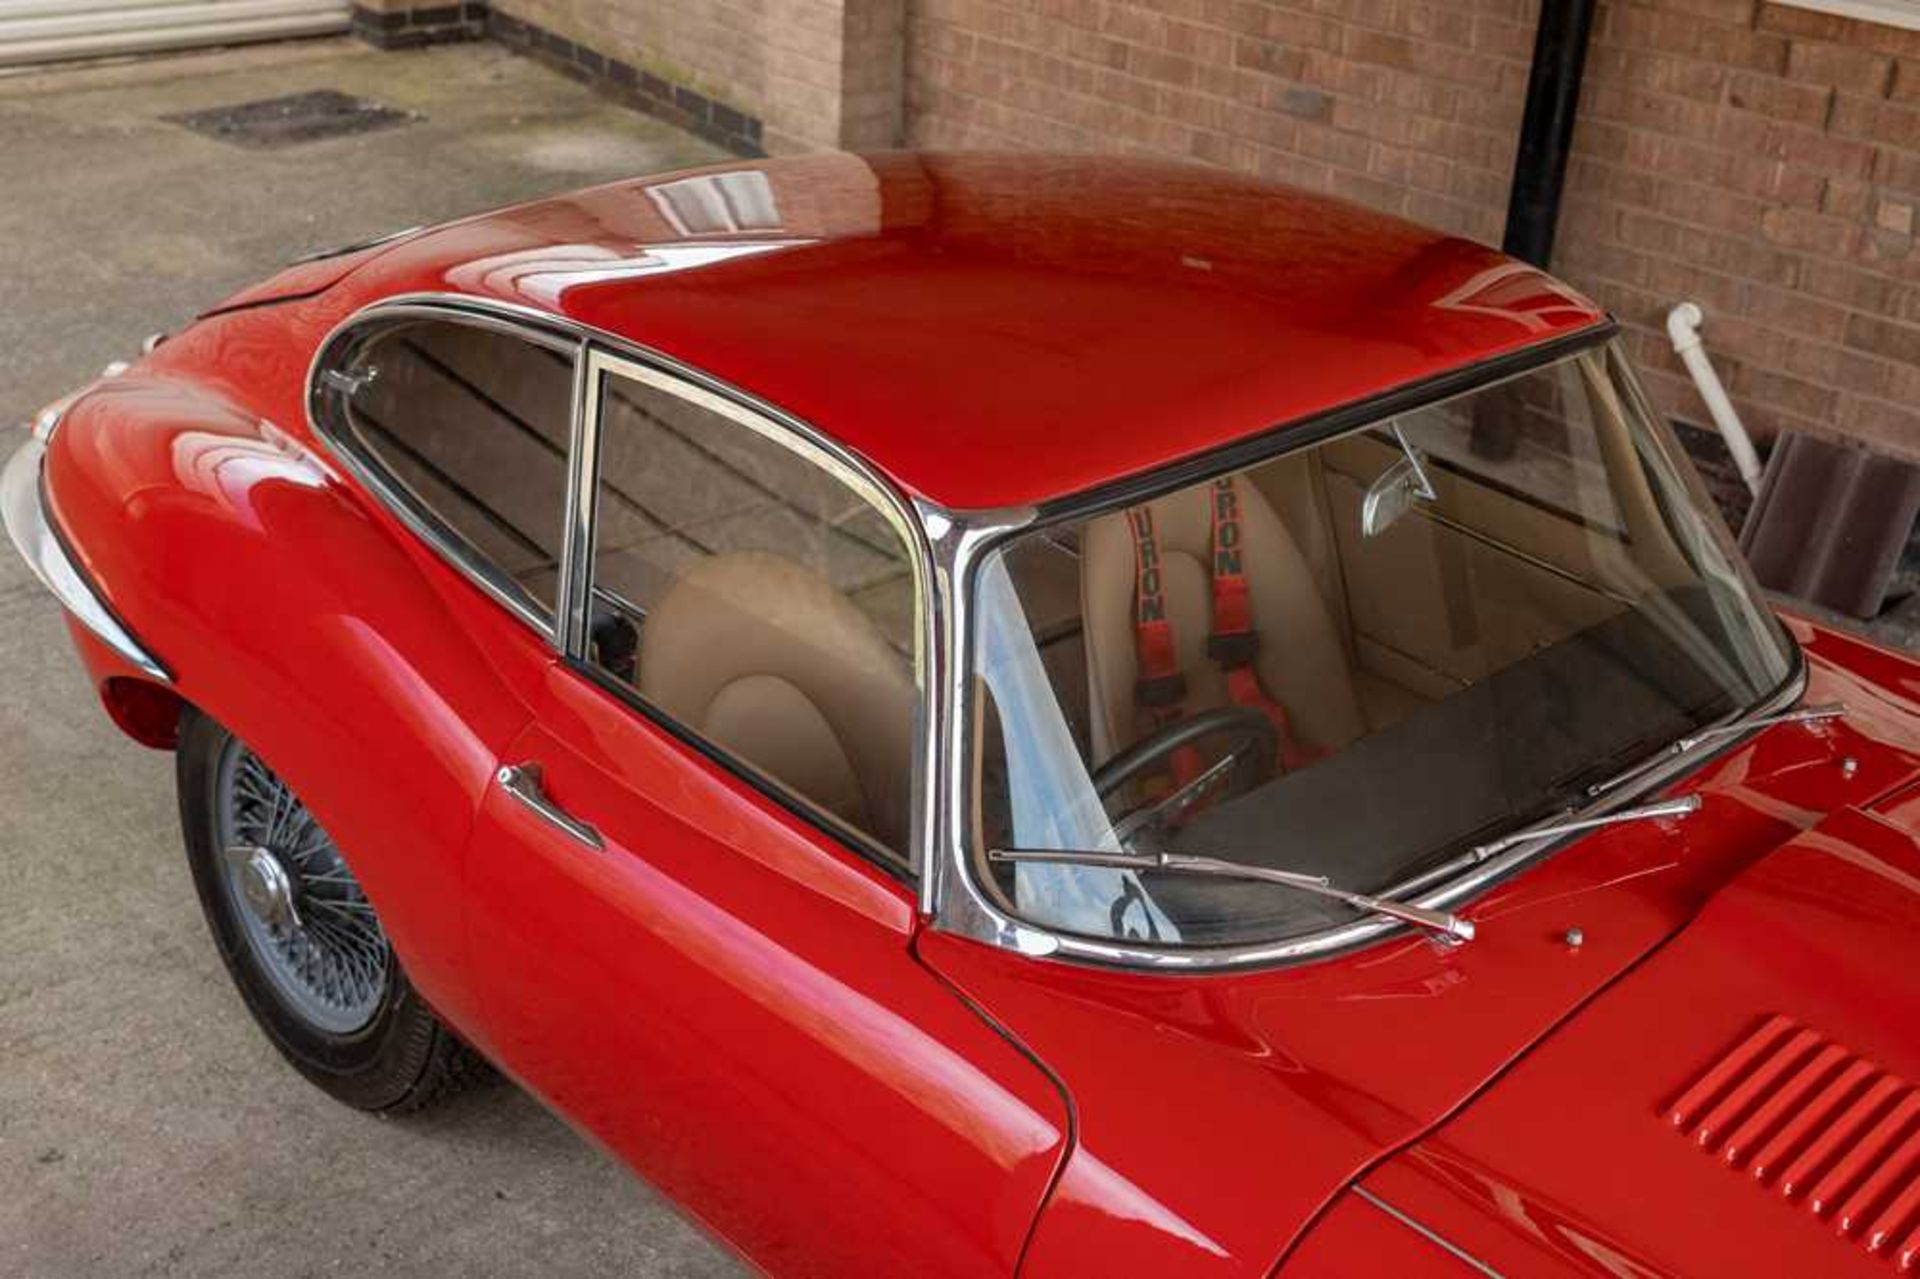 1962 Jaguar E-Type 3.8 litre Fixed Head Coupe No Reserve - Image 19 of 69